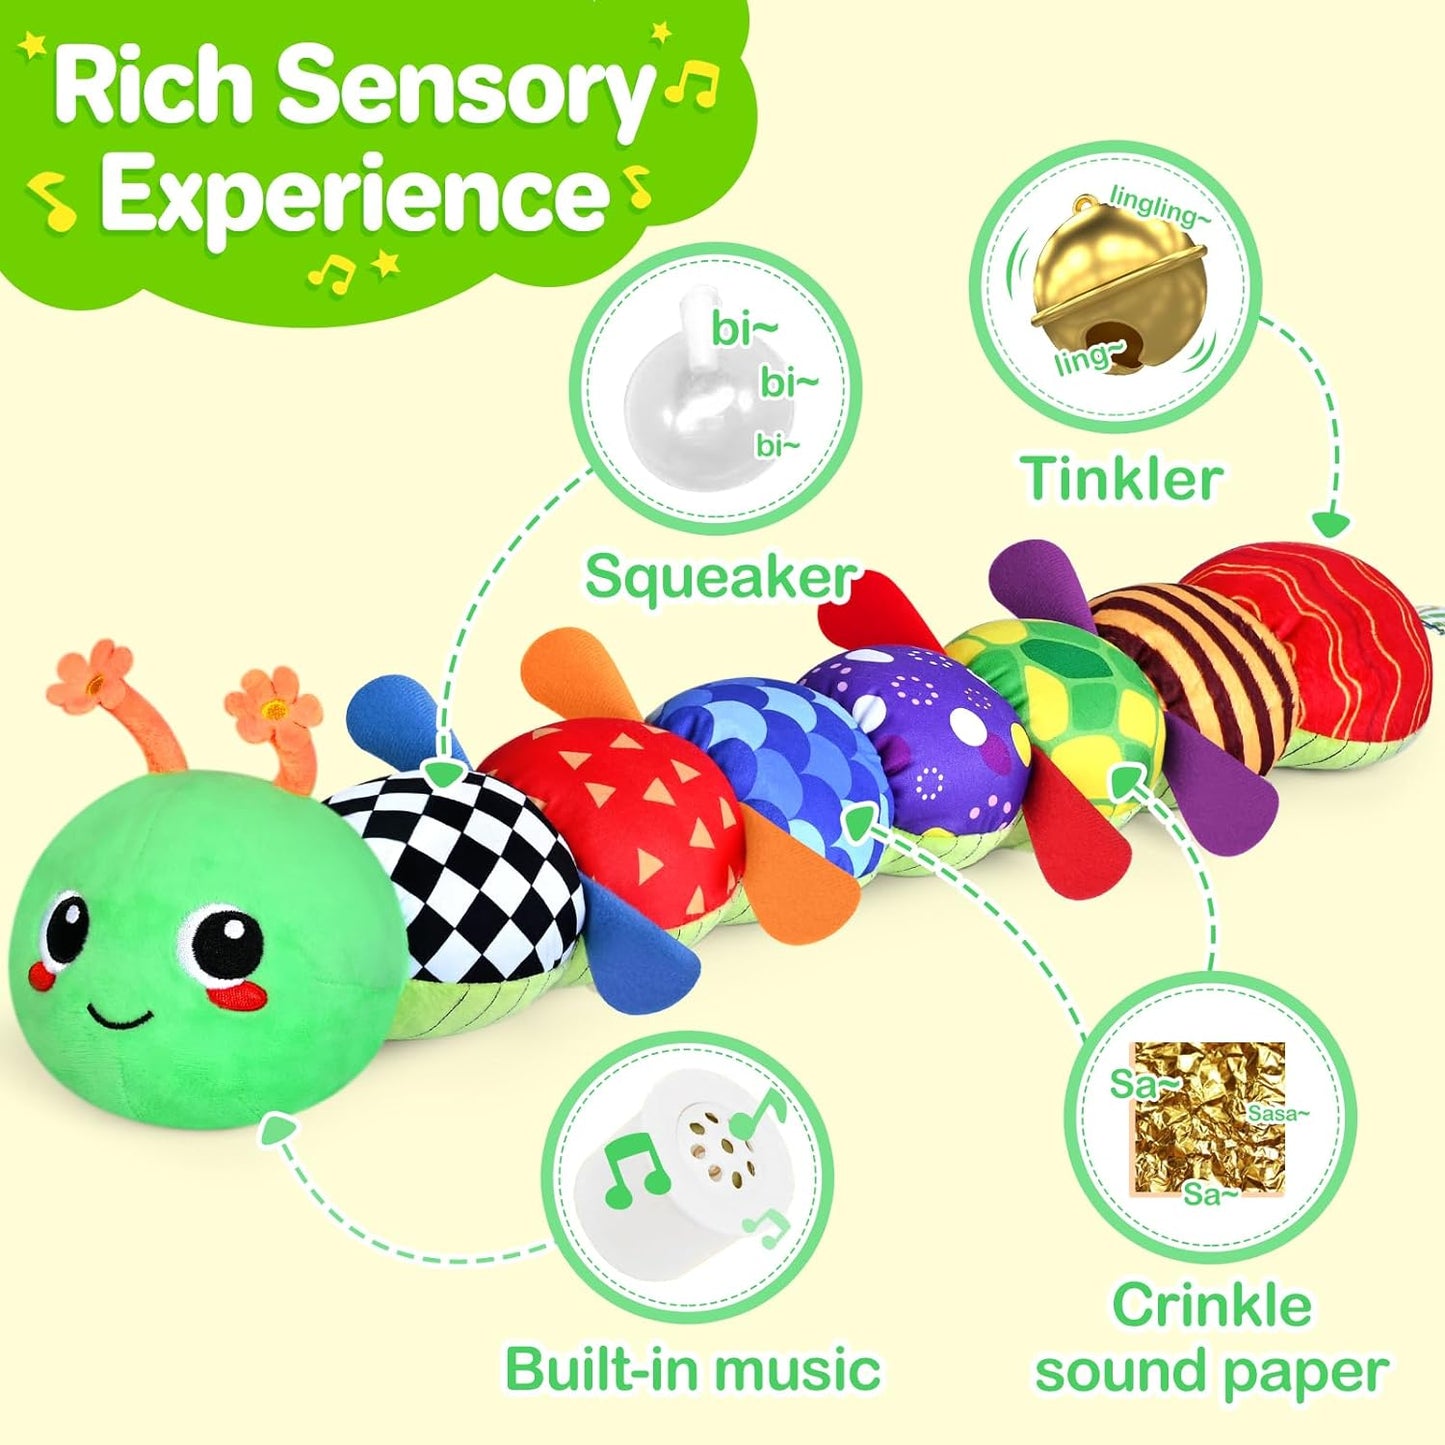 Hommyx Musical Sensory Chameleo Toy for Babies